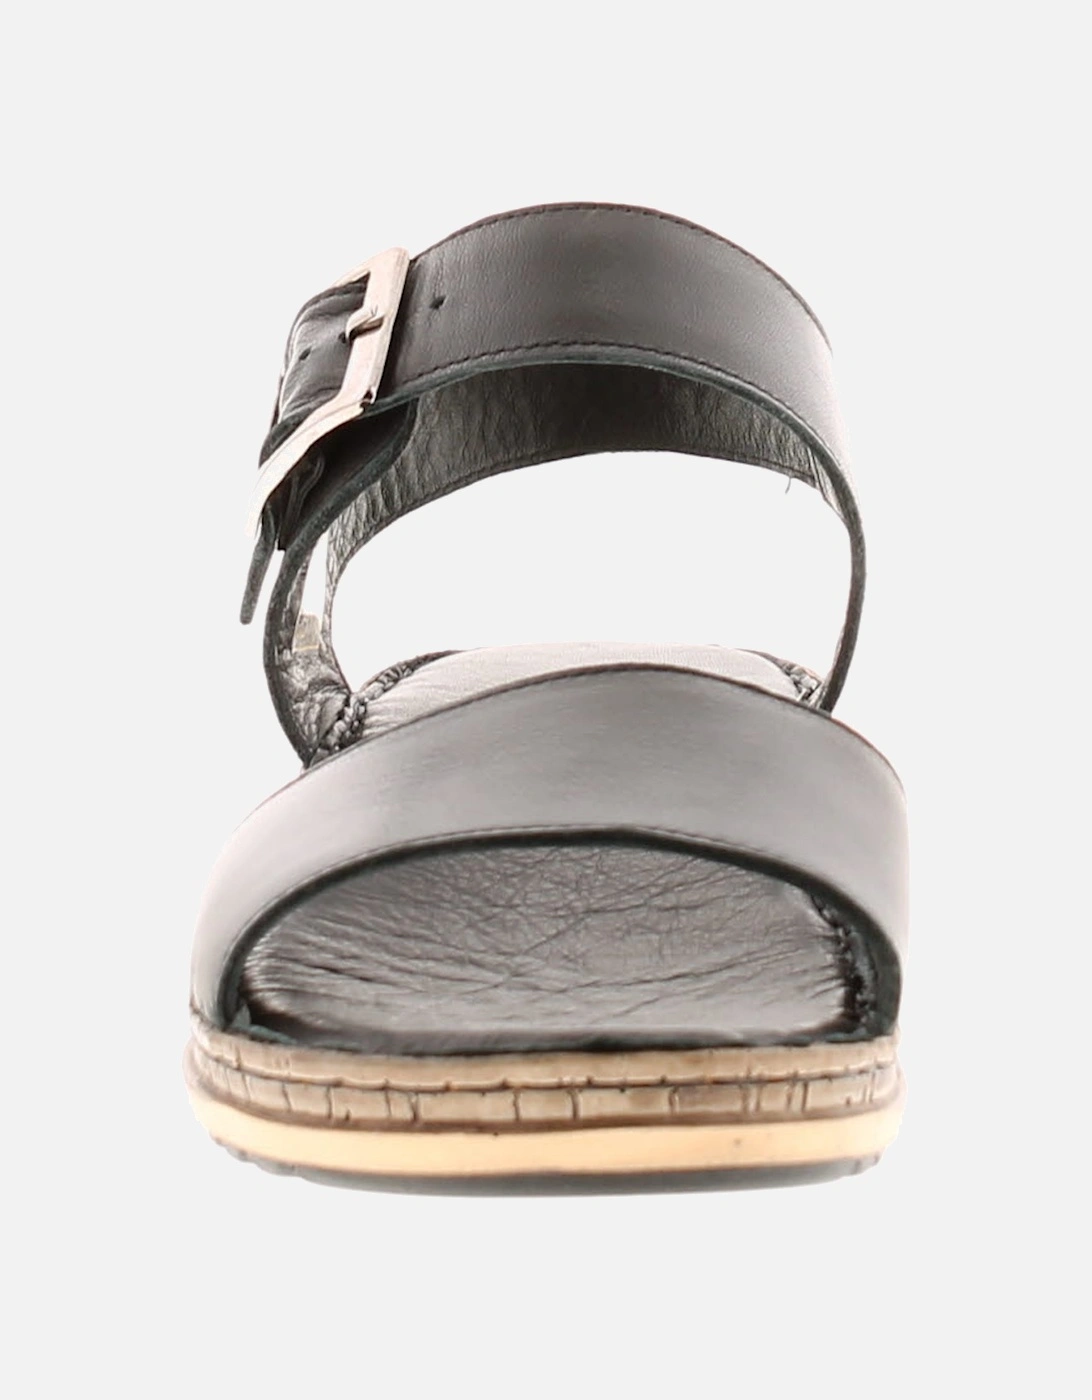 Womens Sandals Wedge Ellie Leather Buckle black UK Size